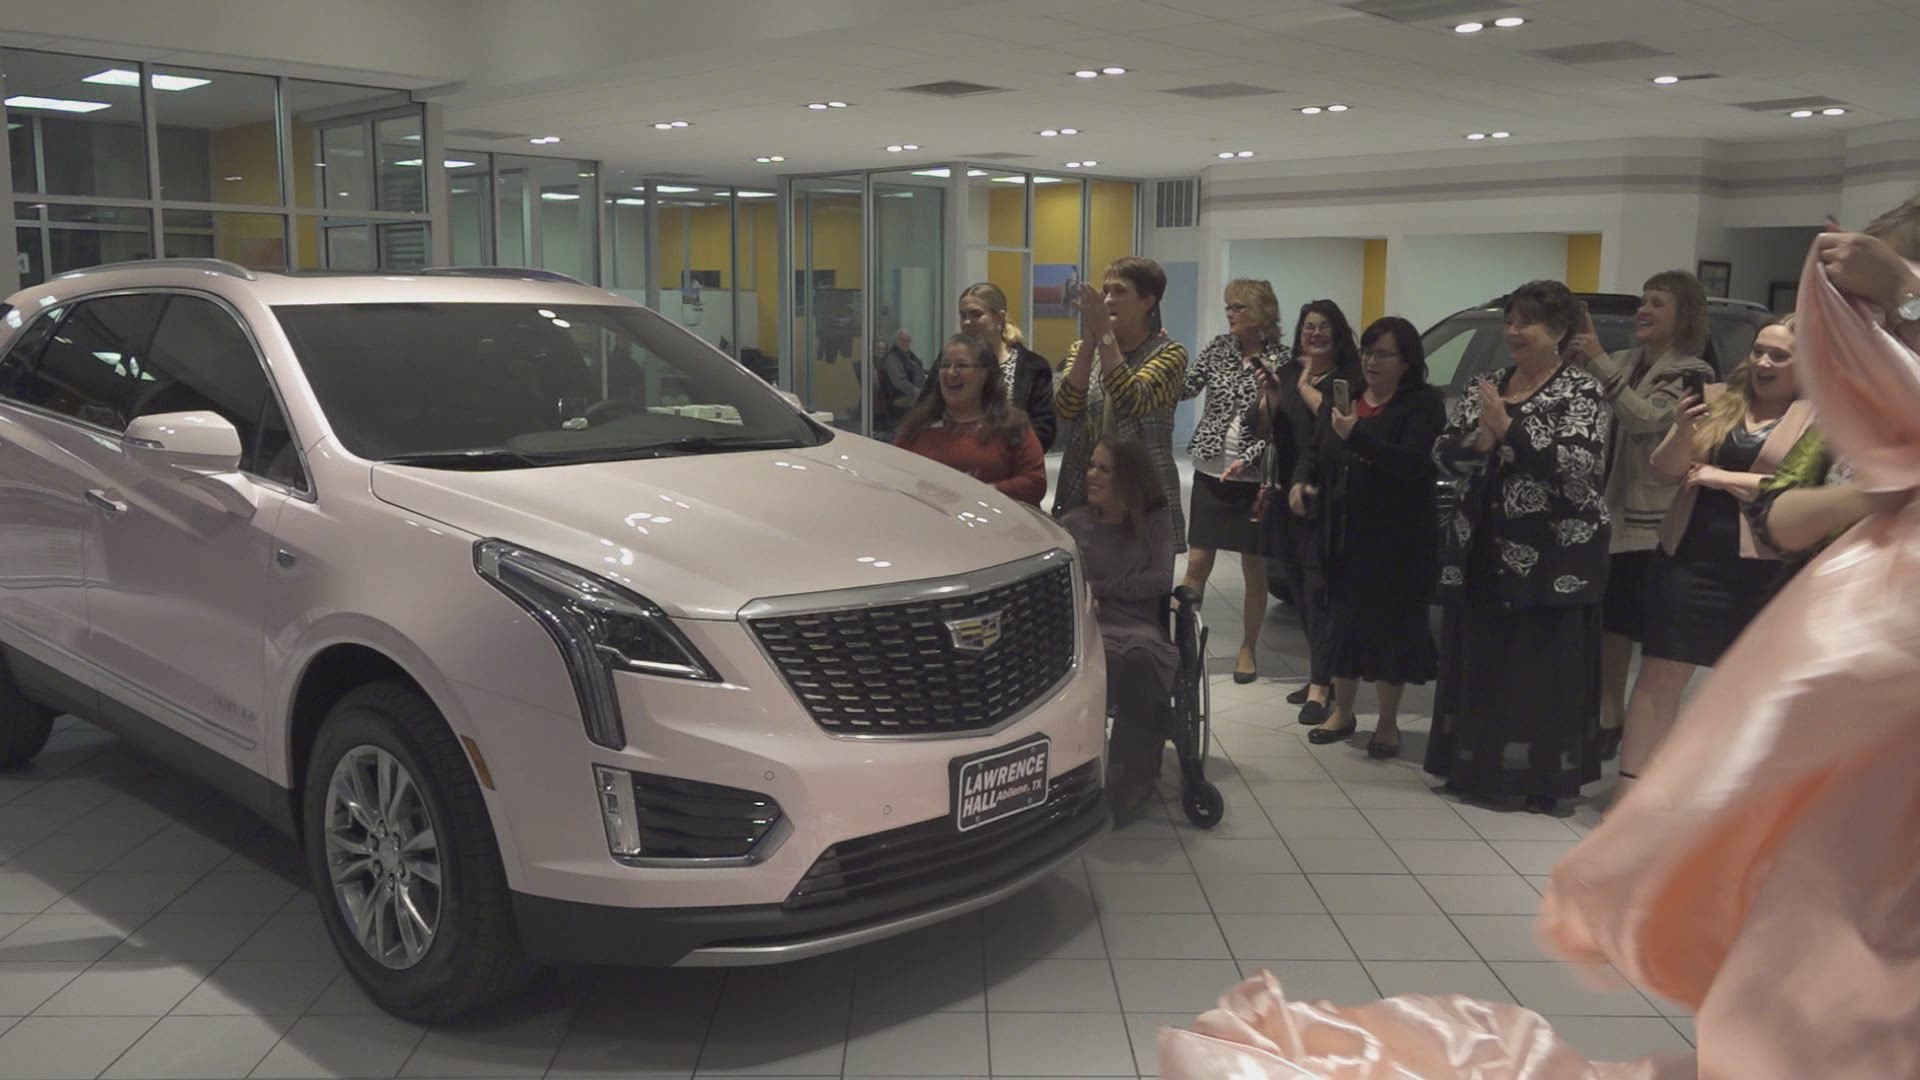 Mary Kay senior sales director awarded pink Cadillac.